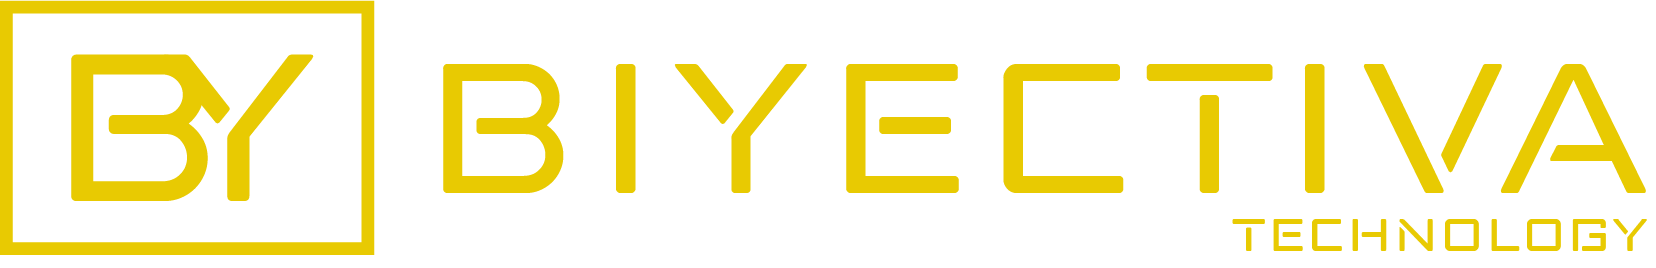 Biyectiva logo yellow transparent background